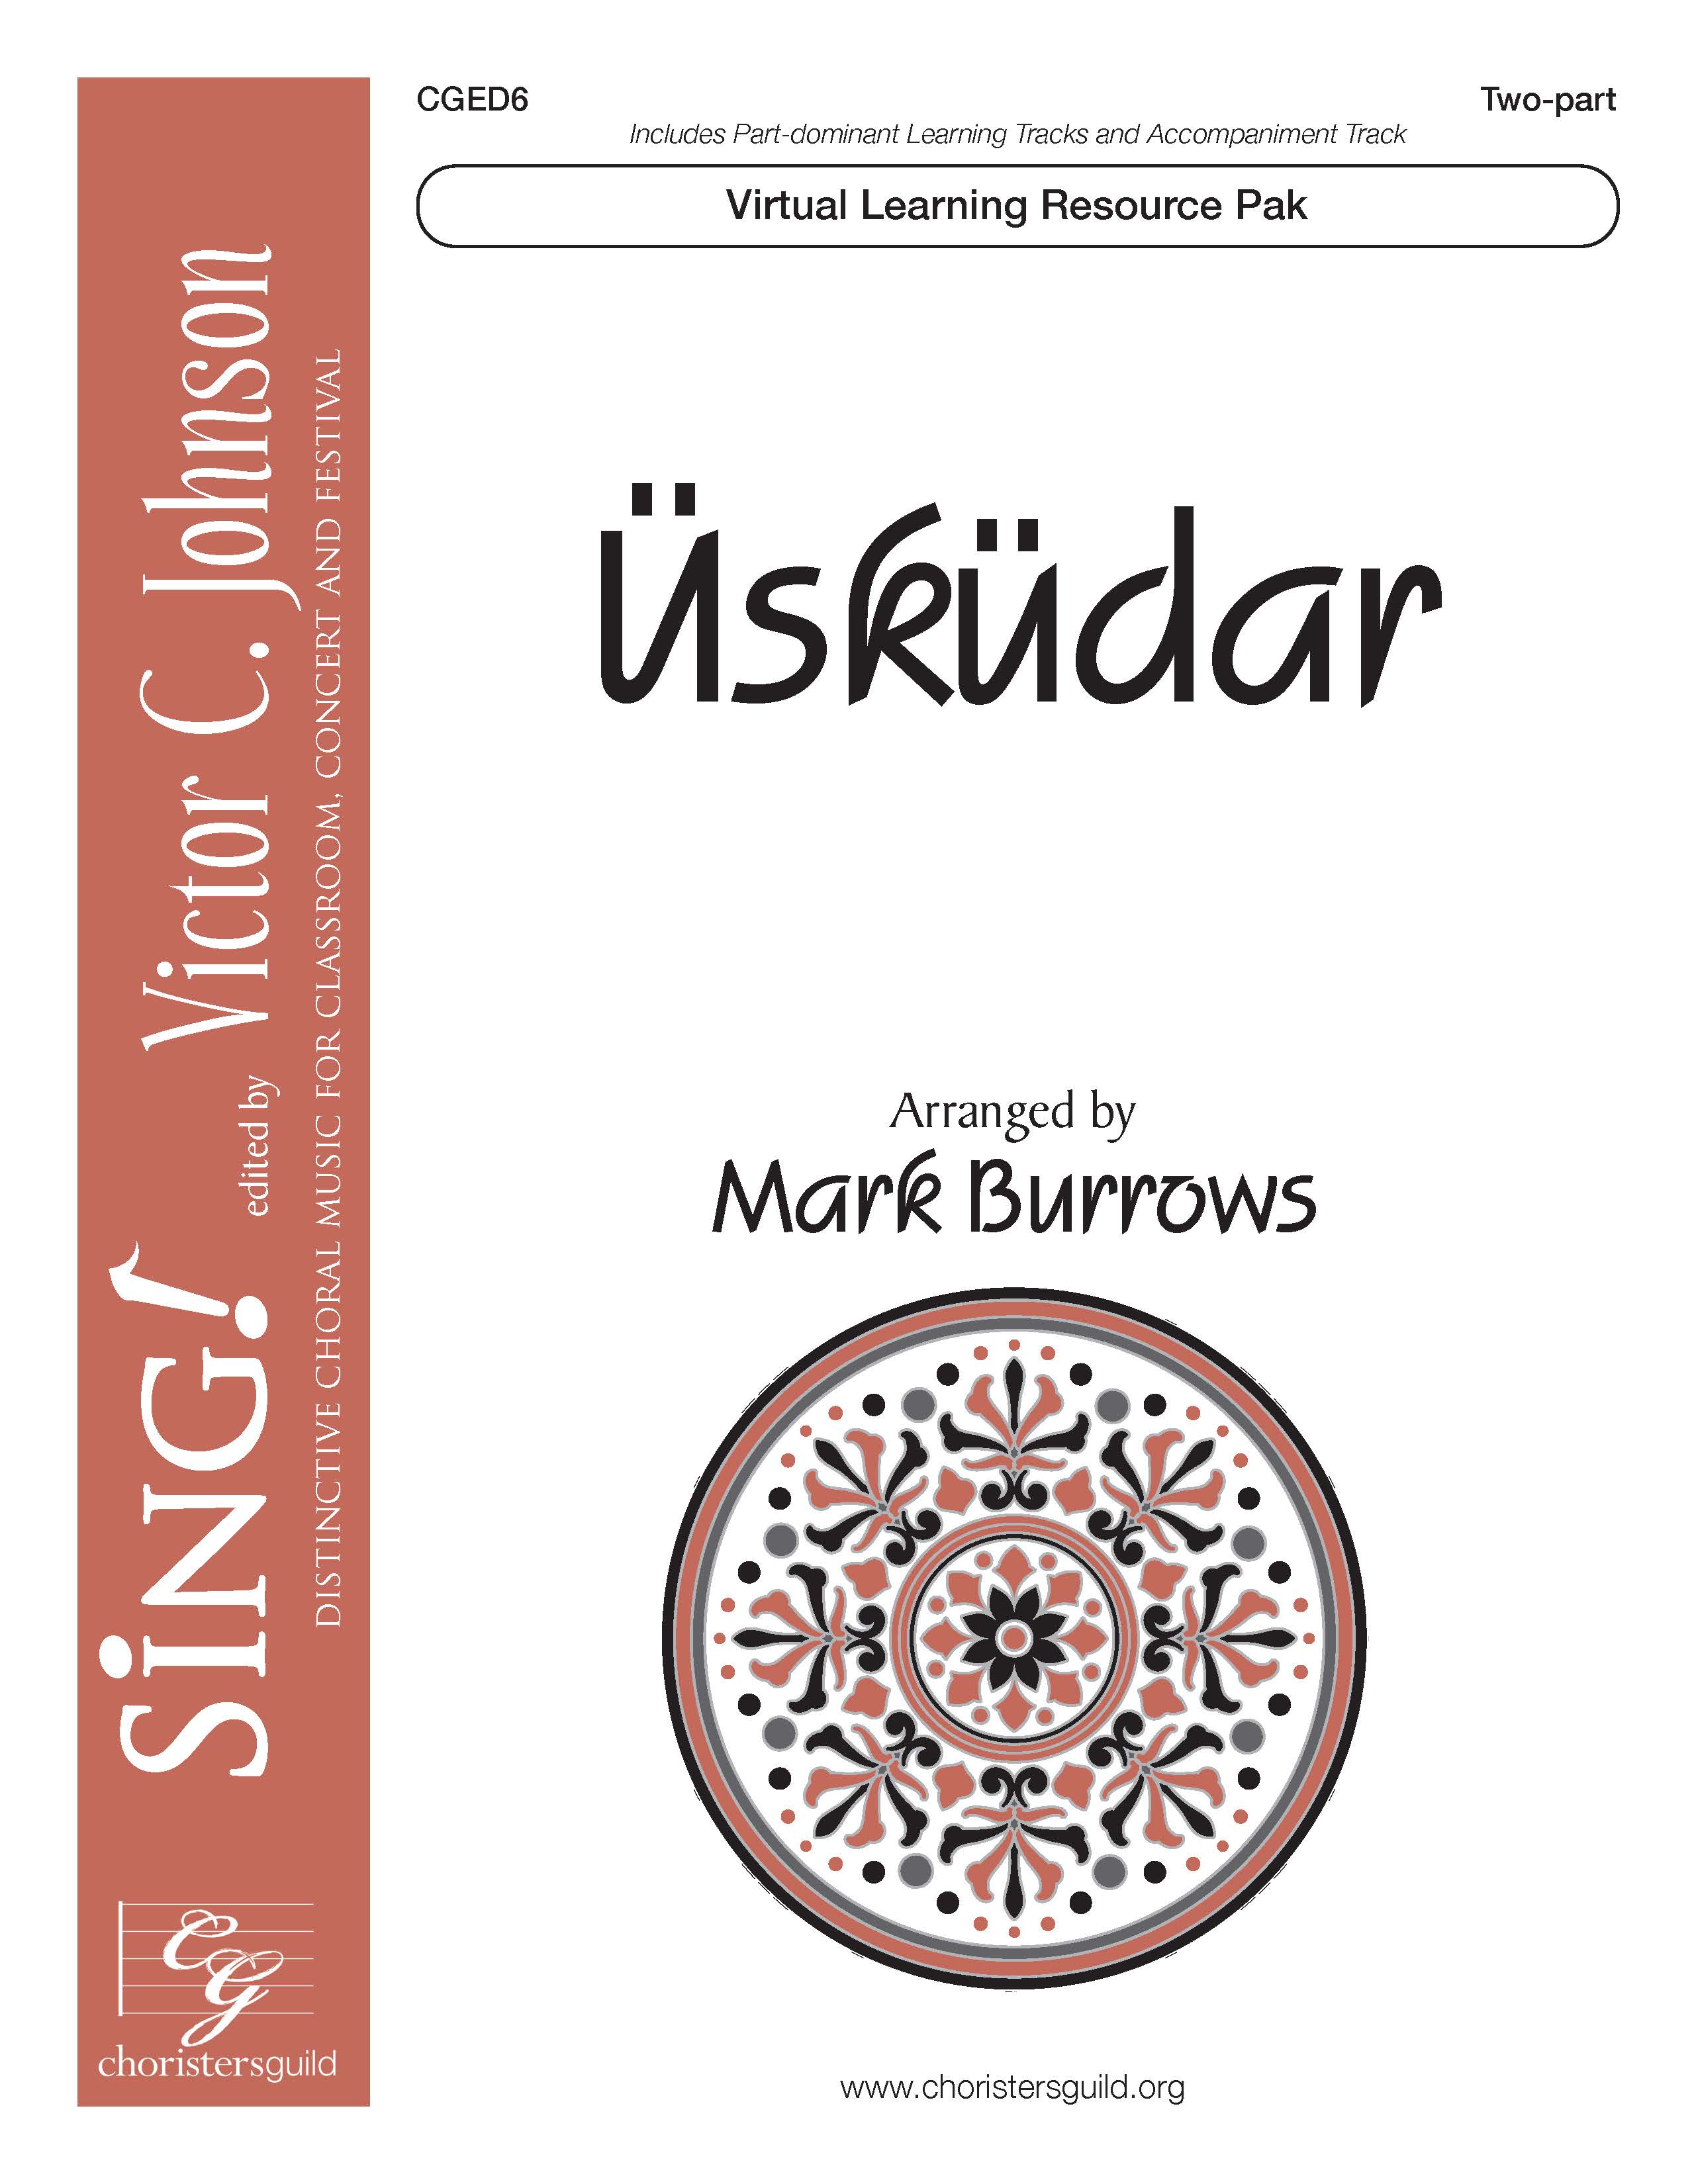 Uskudar (Virtual Learning Resource Pak) - Two-part